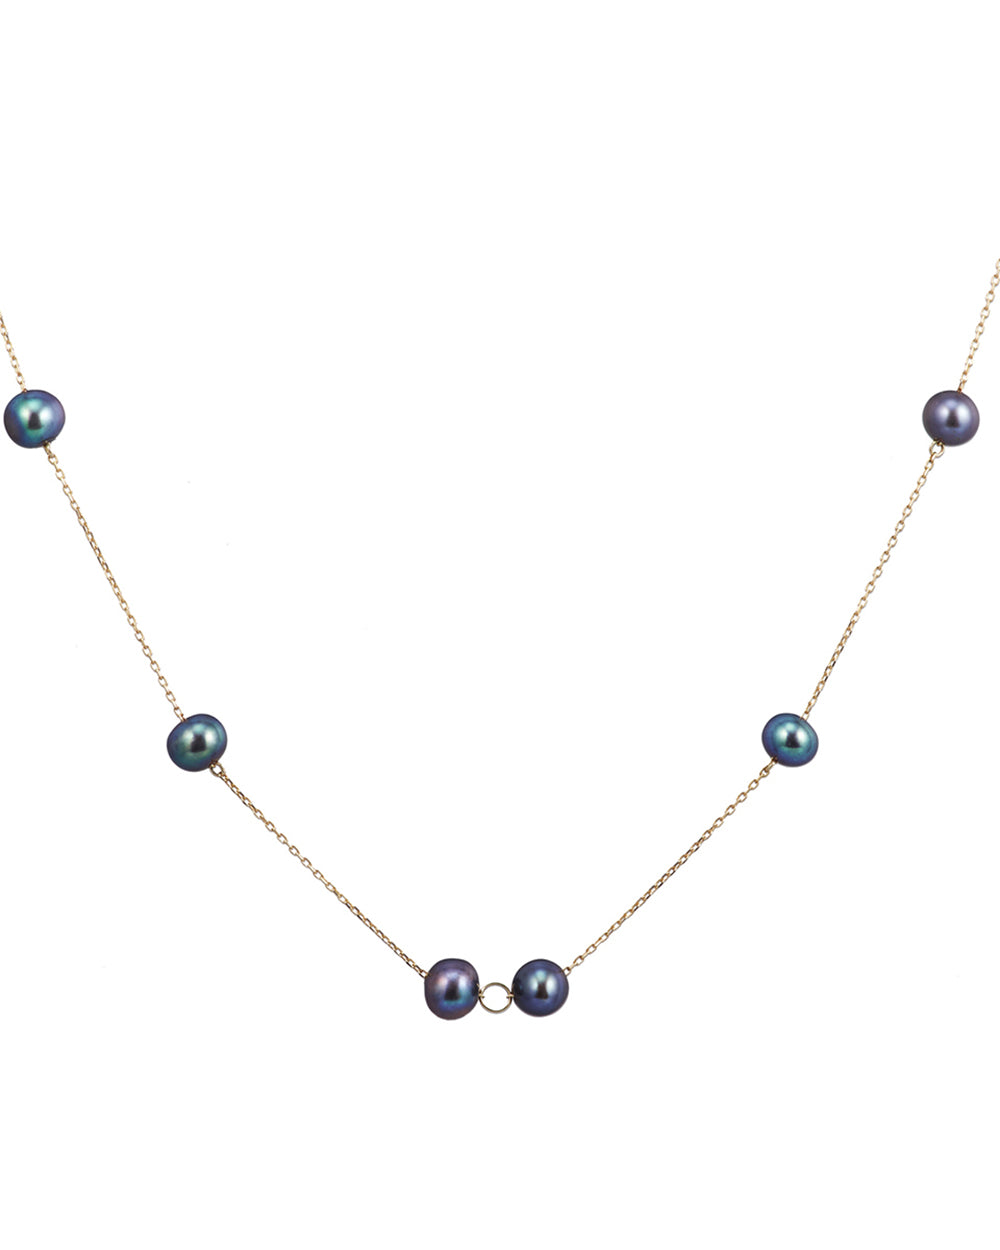 SM06 Lane long black pearl necklace